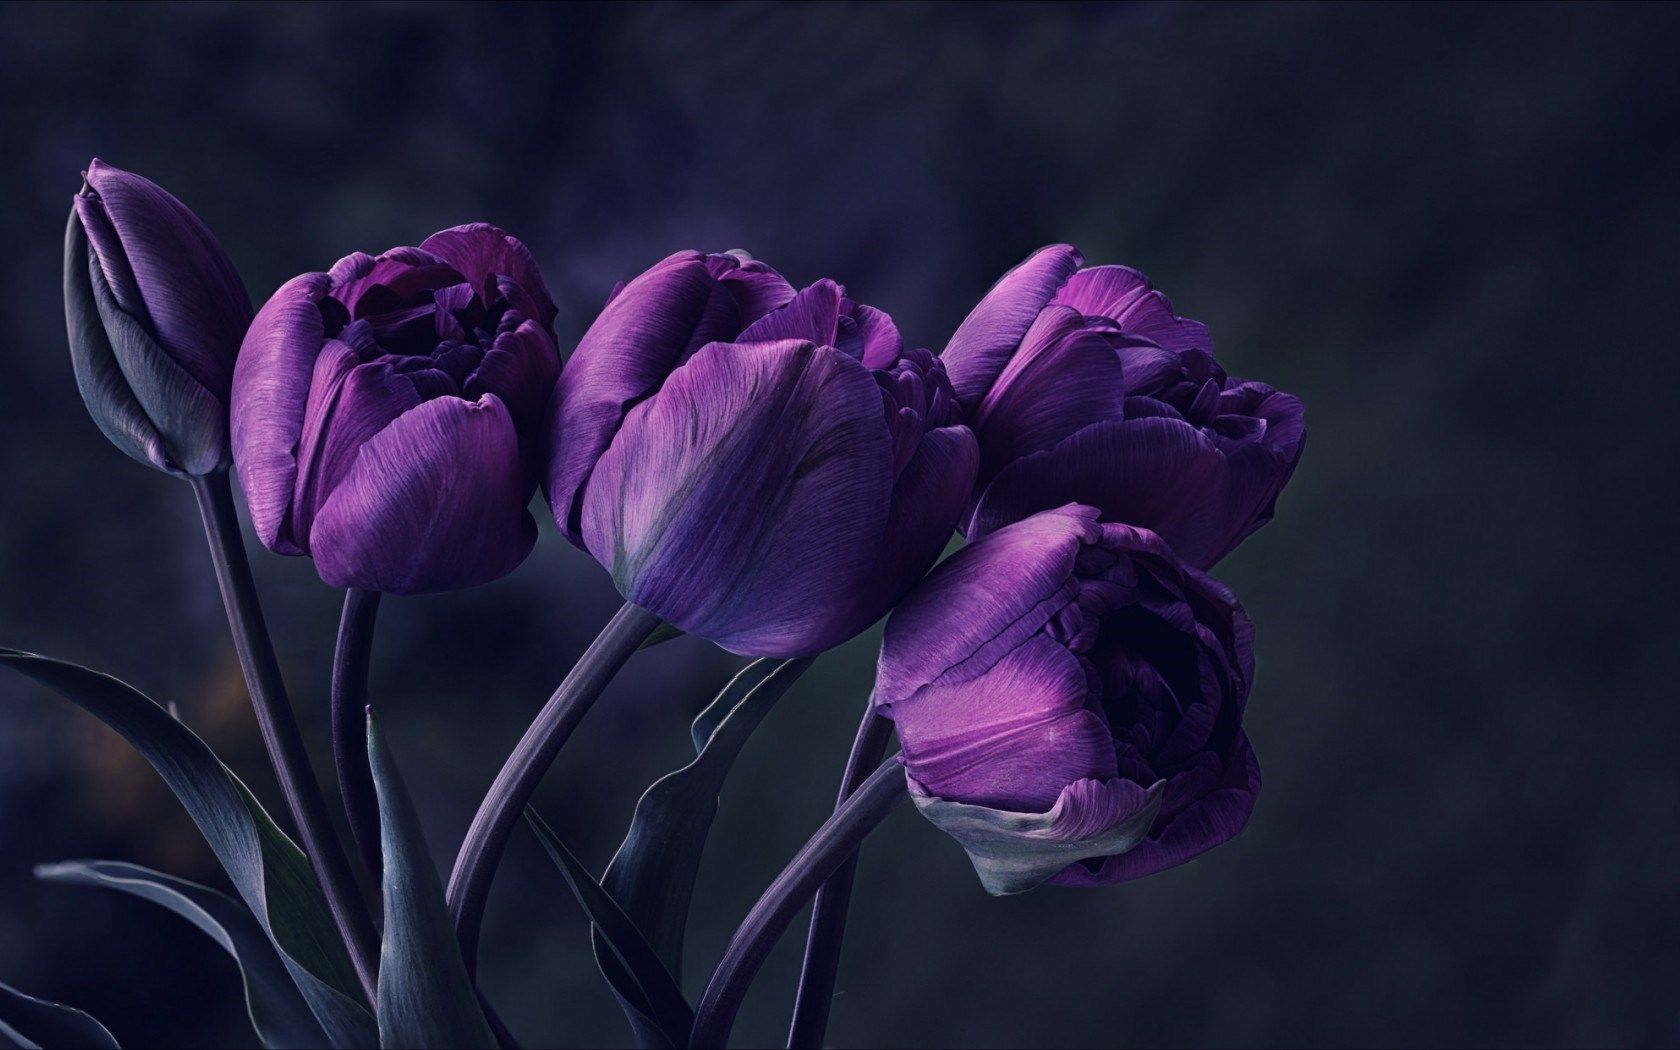 Free download night dark tulips purple petals photo beautiful